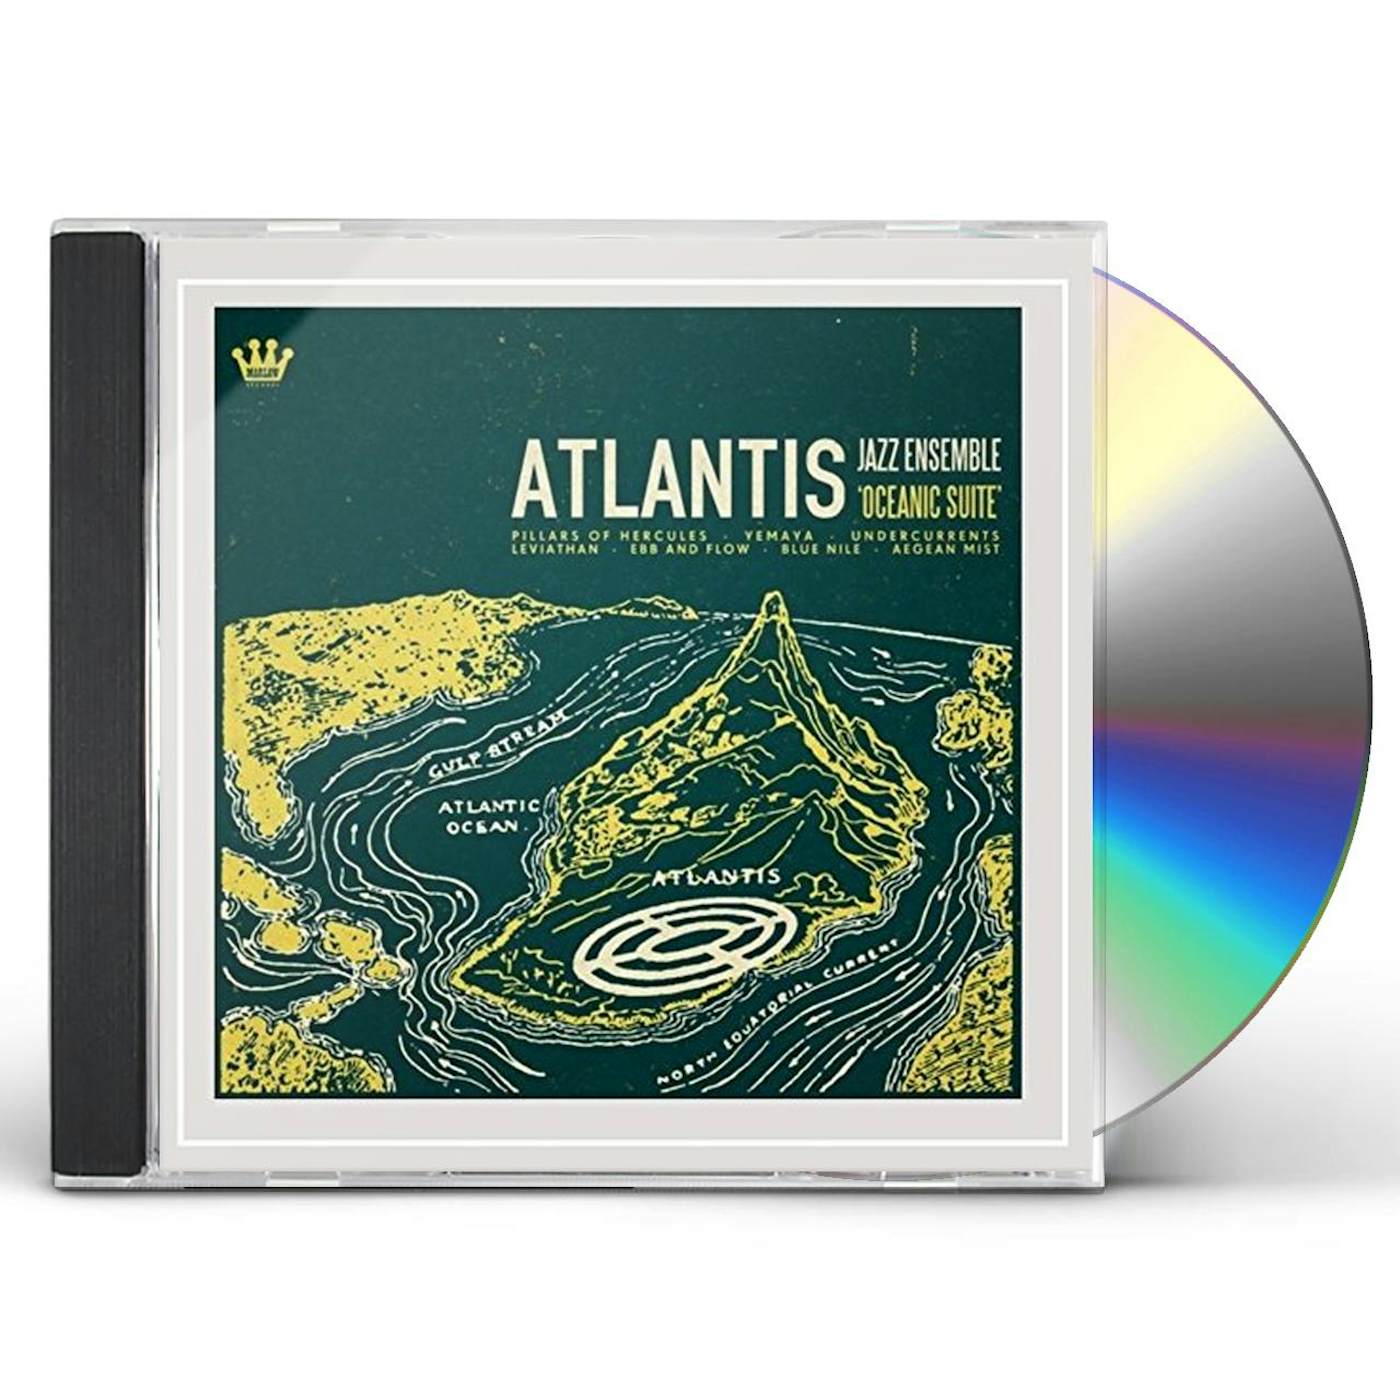 Atlantis Jazz Ensemble OCEANIC SUITE CD